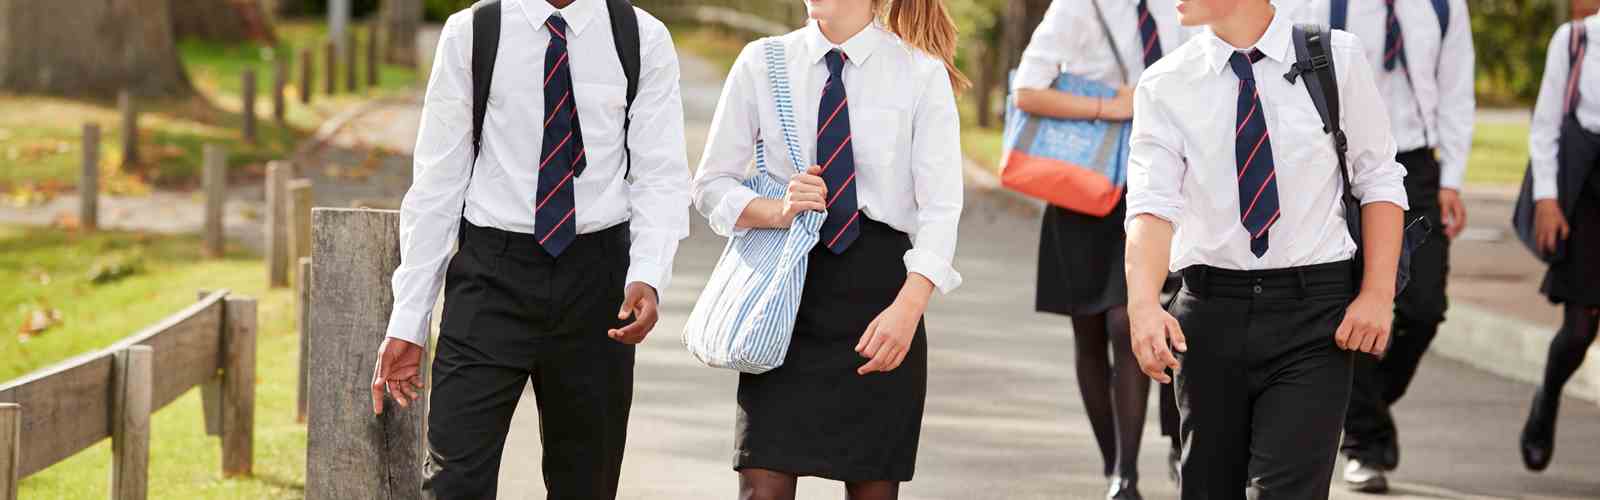 Teenagers walking to school